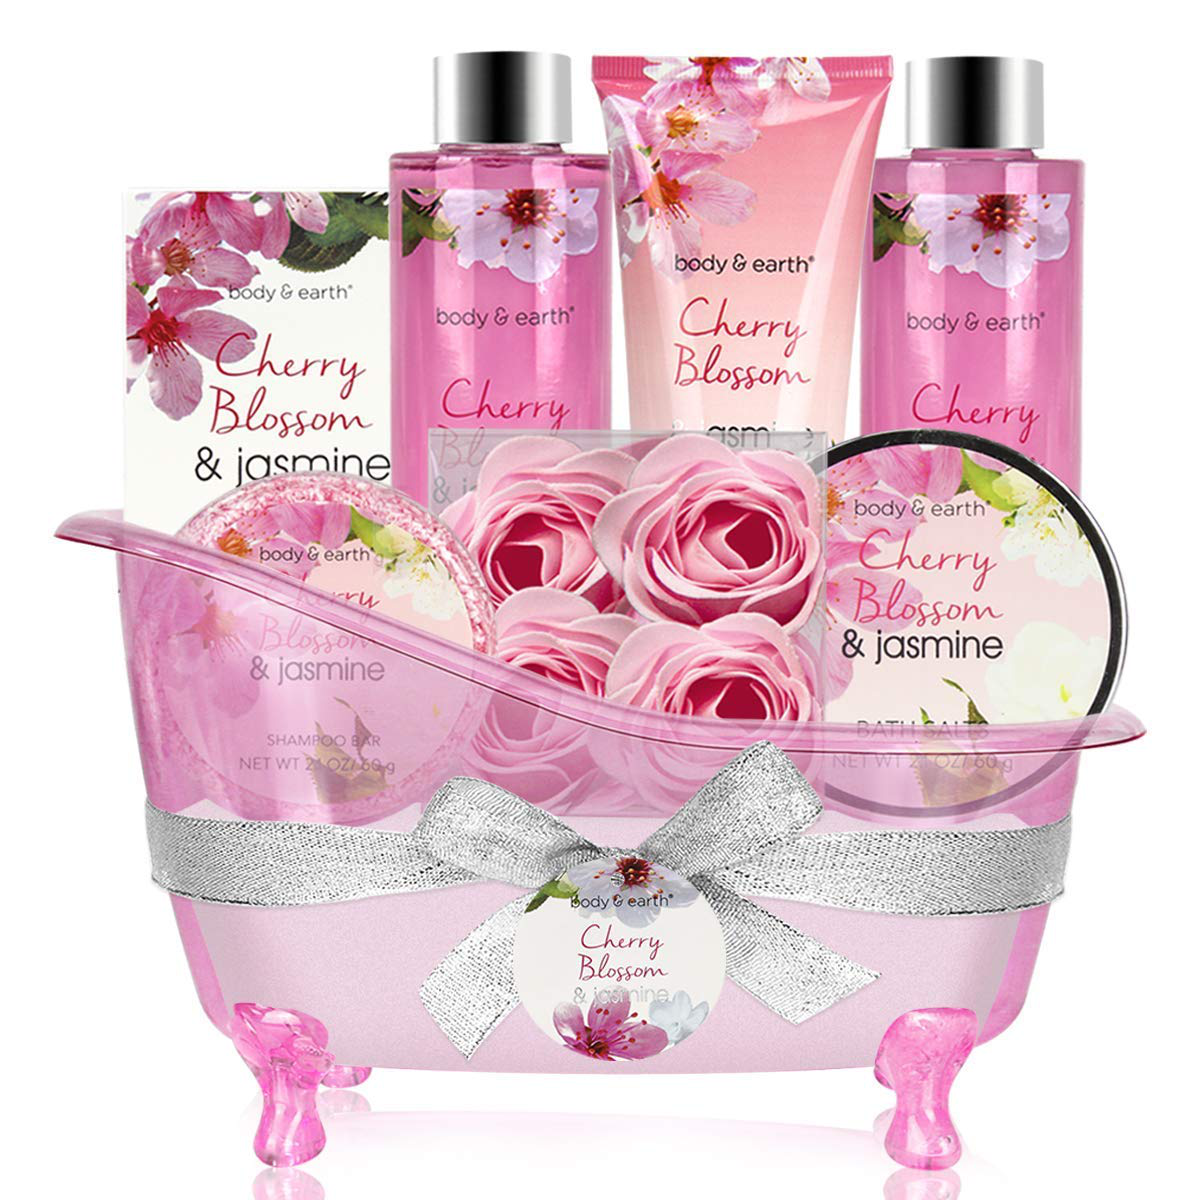 Gift Basket for Women - Spa Gift Baskets 8 Pcs Women Bath Sets with Cherry Blossom & Jasmine